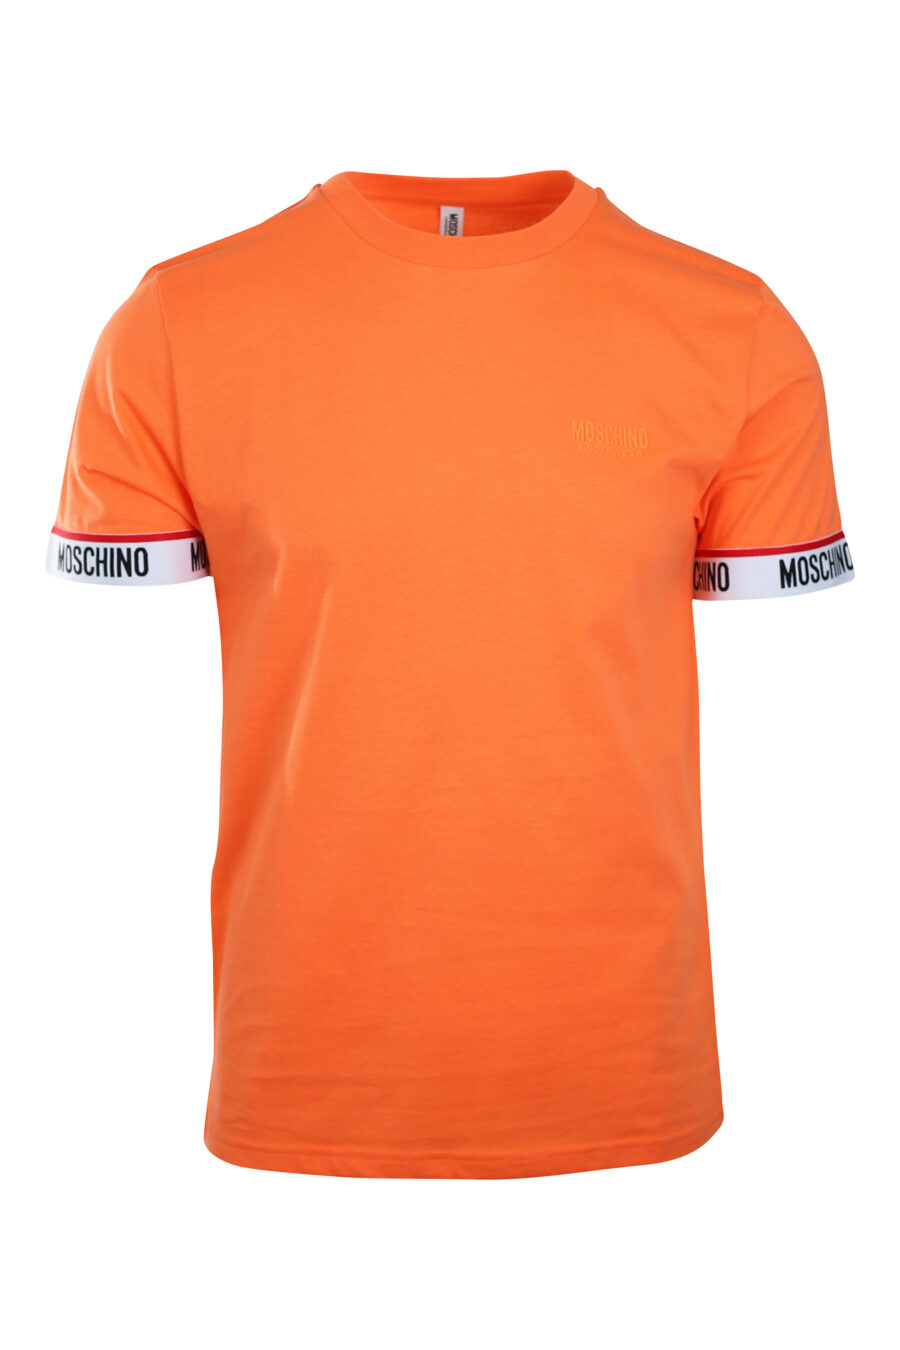 Camiseta naranja con logo en banda en mangas y minilogo monocromático - IMG 2206